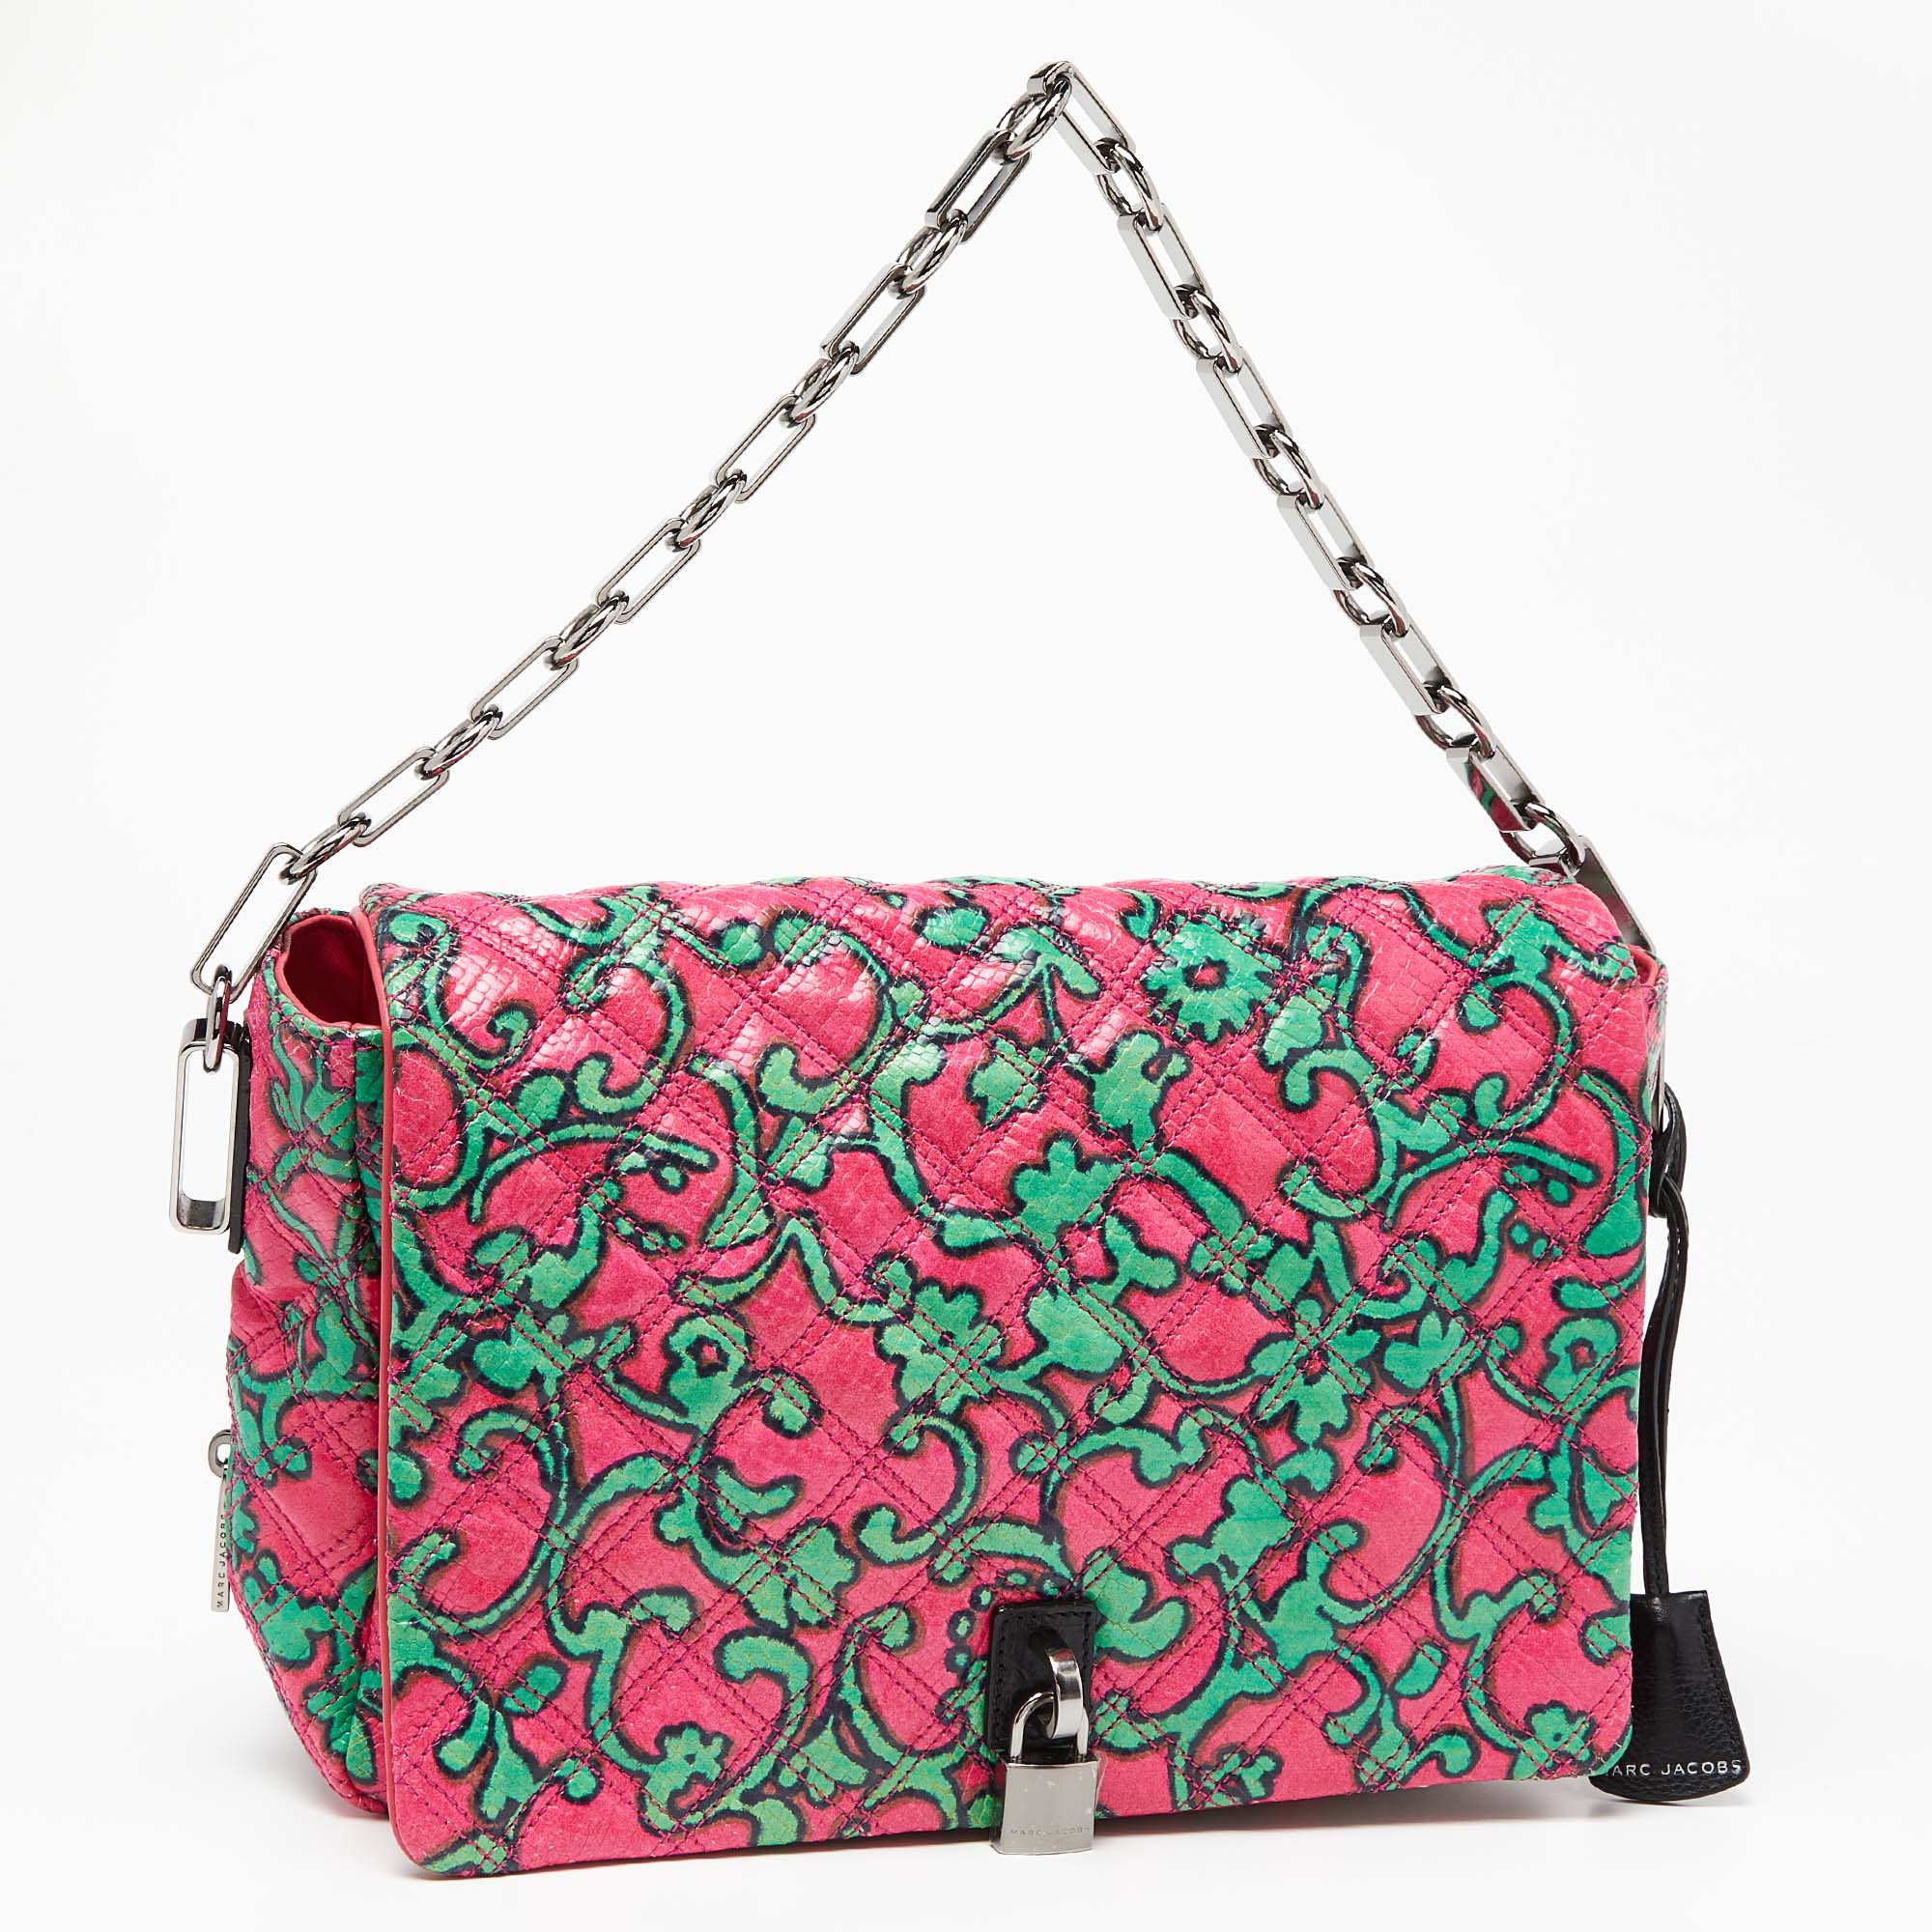 Marc Jacobs Pink/Green Quilted Python Embossed Leather Shoulder Bag